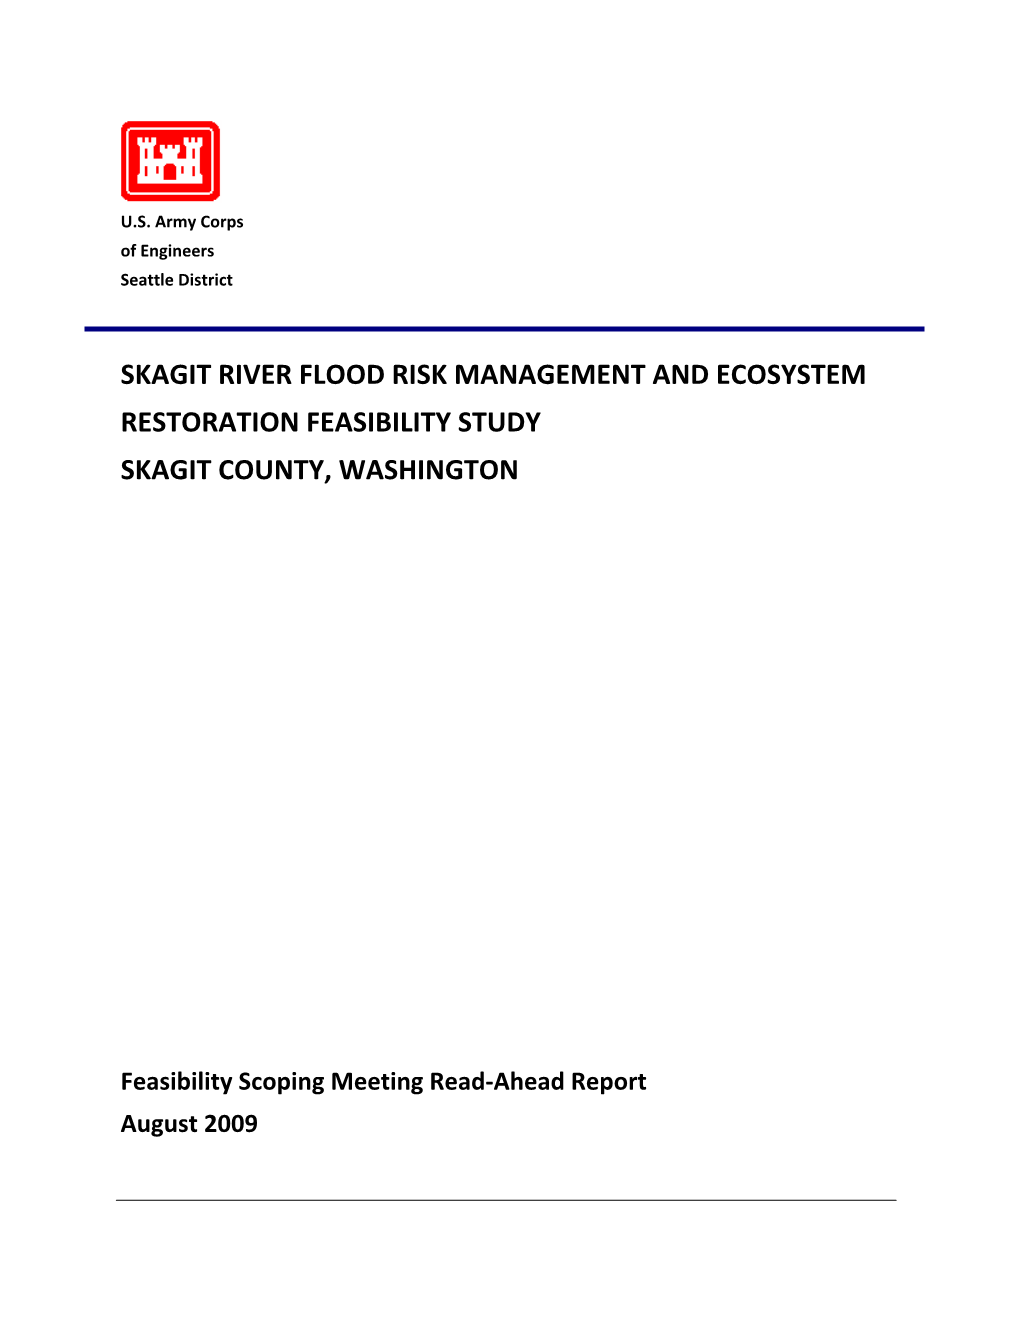 Skagit River Flood Risk Management and Ecosystem Restoration Feasibility Study Skagit County, Washington